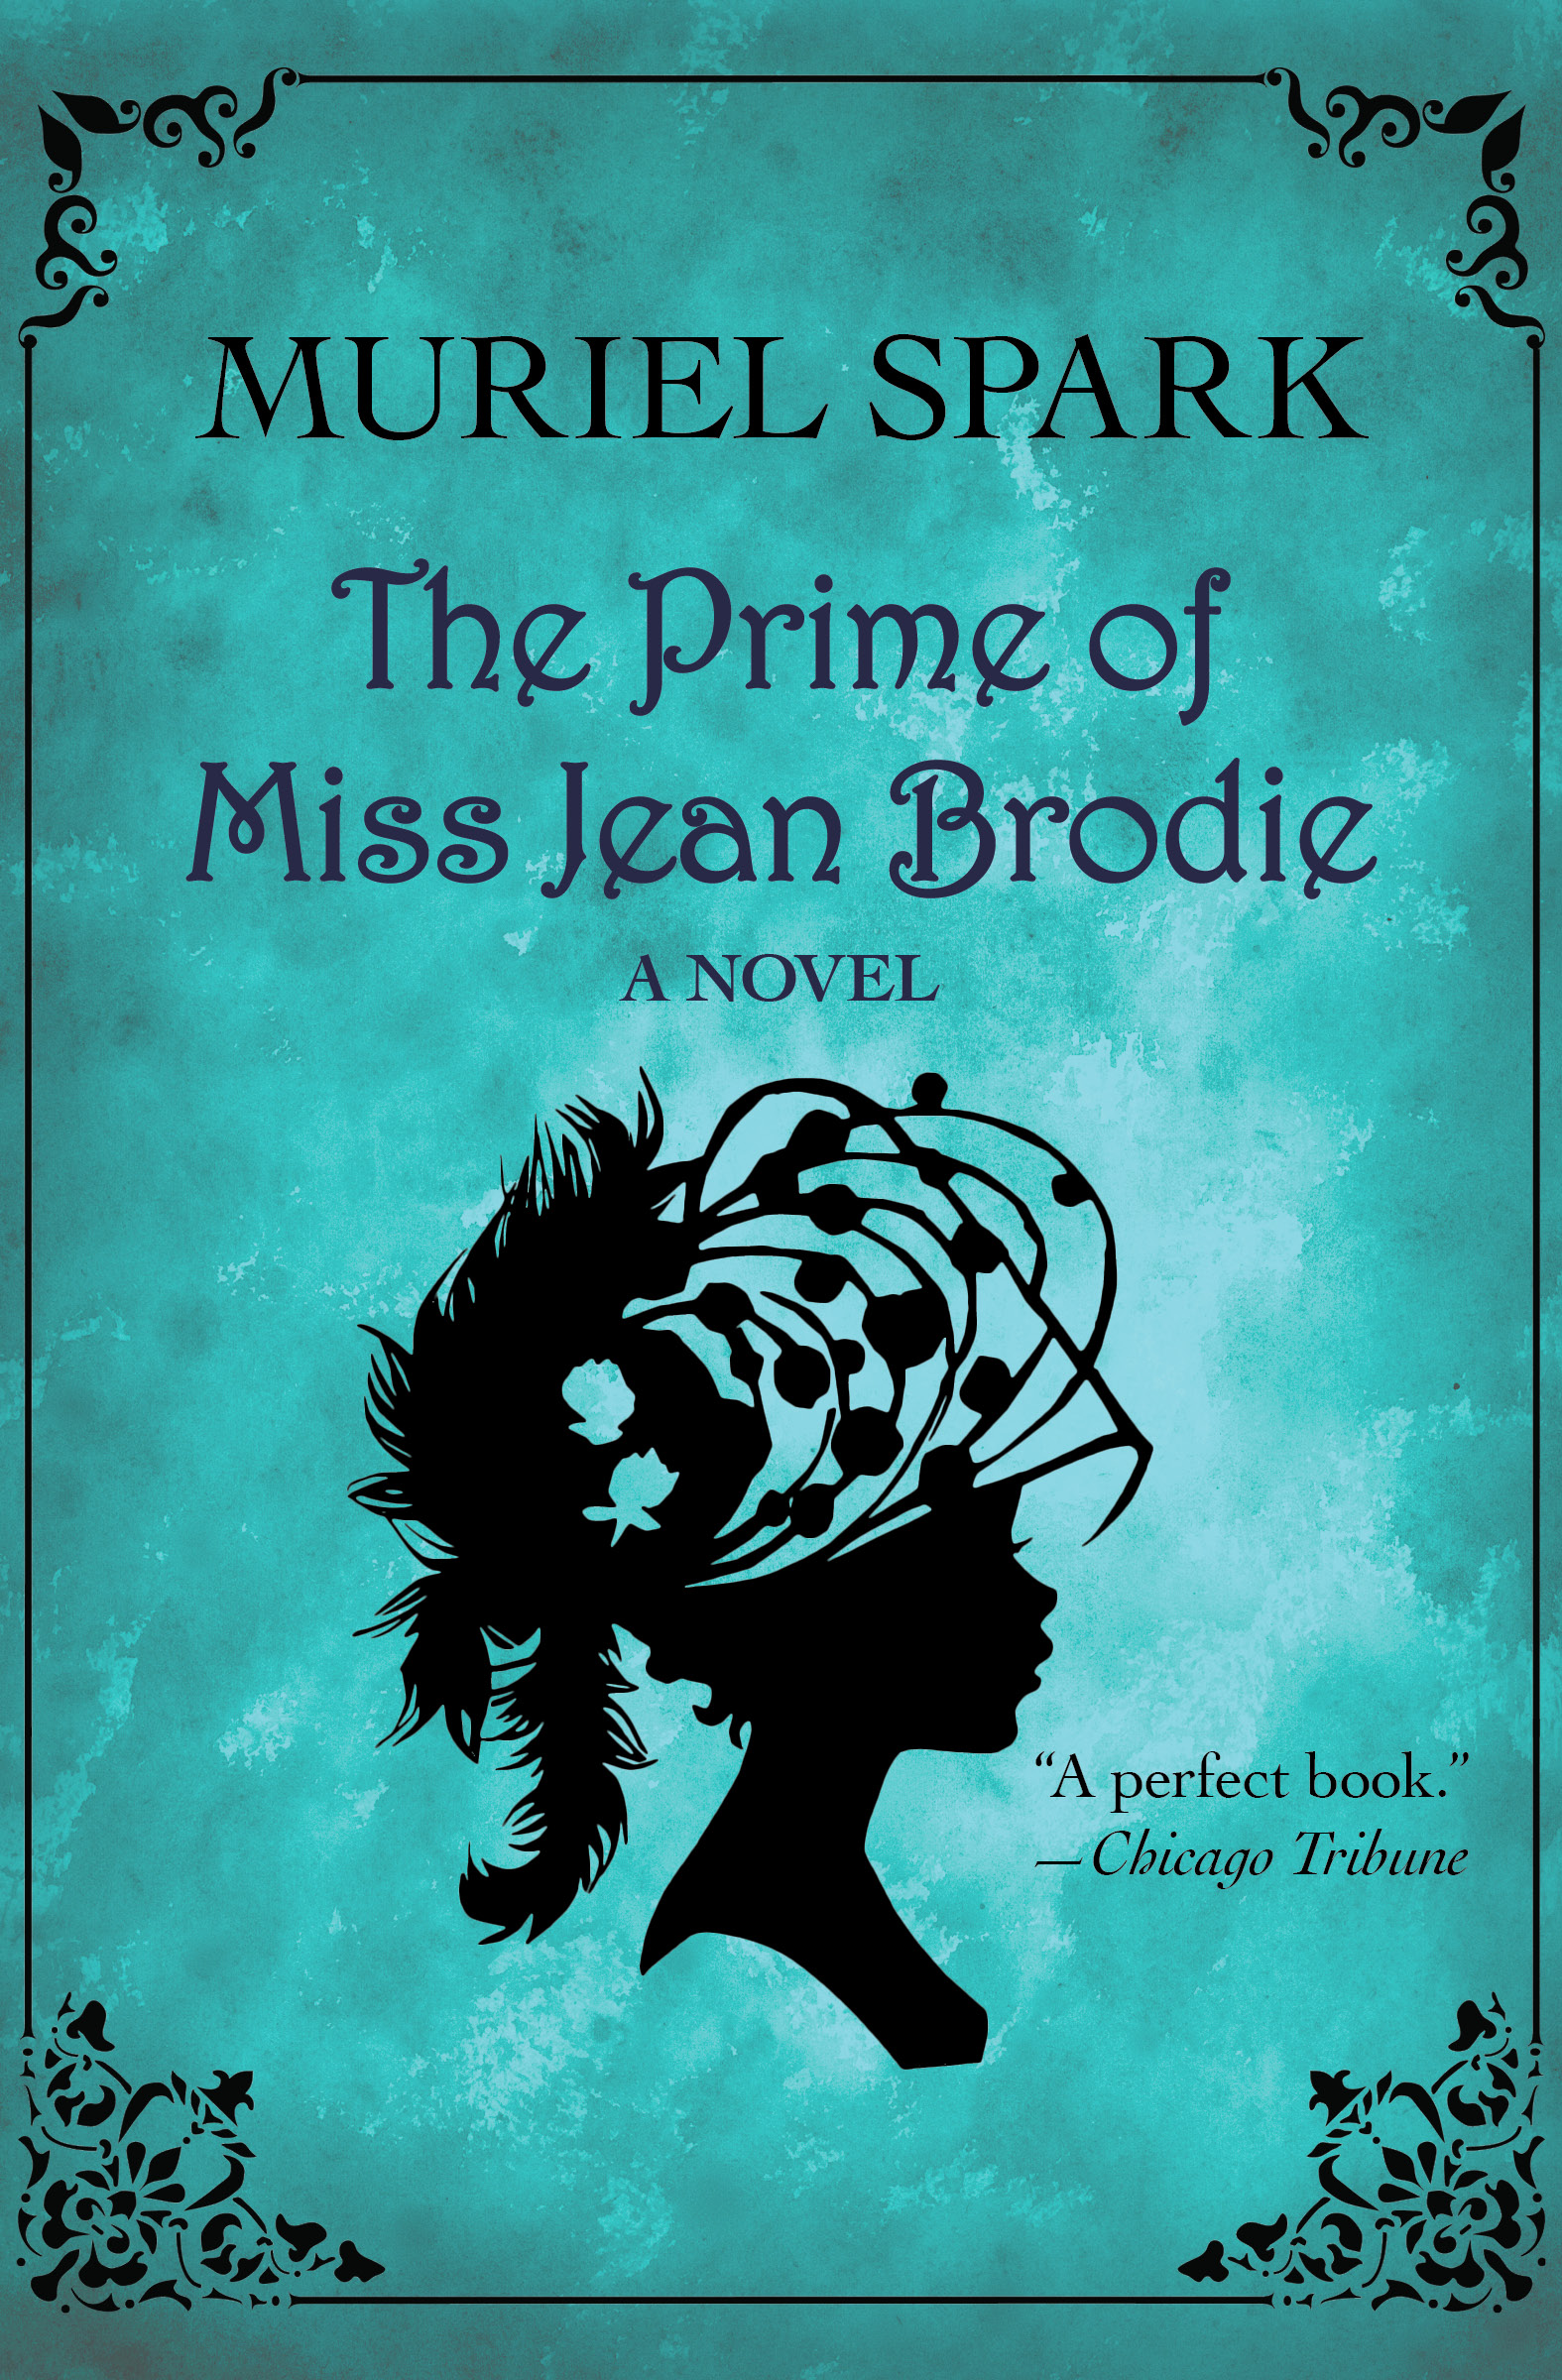 The Prime of Miss Jean Brodie - 15-24.99